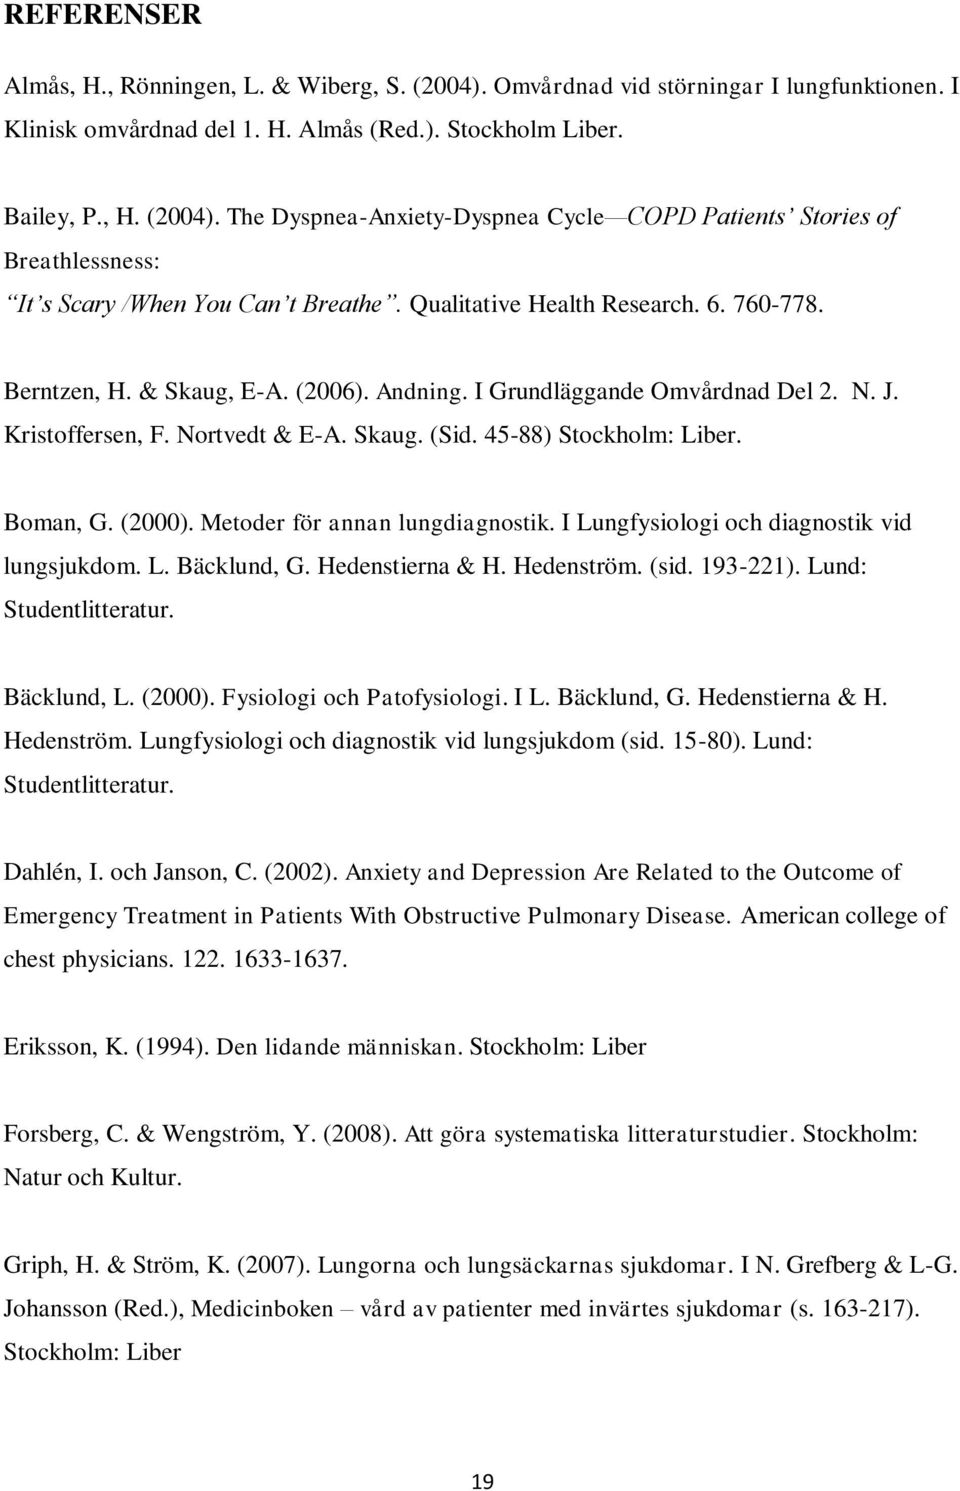 Boman, G. (2000). Metoder för annan lungdiagnostik. I Lungfysiologi och diagnostik vid lungsjukdom. L. Bäcklund, G. Hedenstierna & H. Hedenström. (sid. 193-221). Lund: Studentlitteratur. Bäcklund, L.